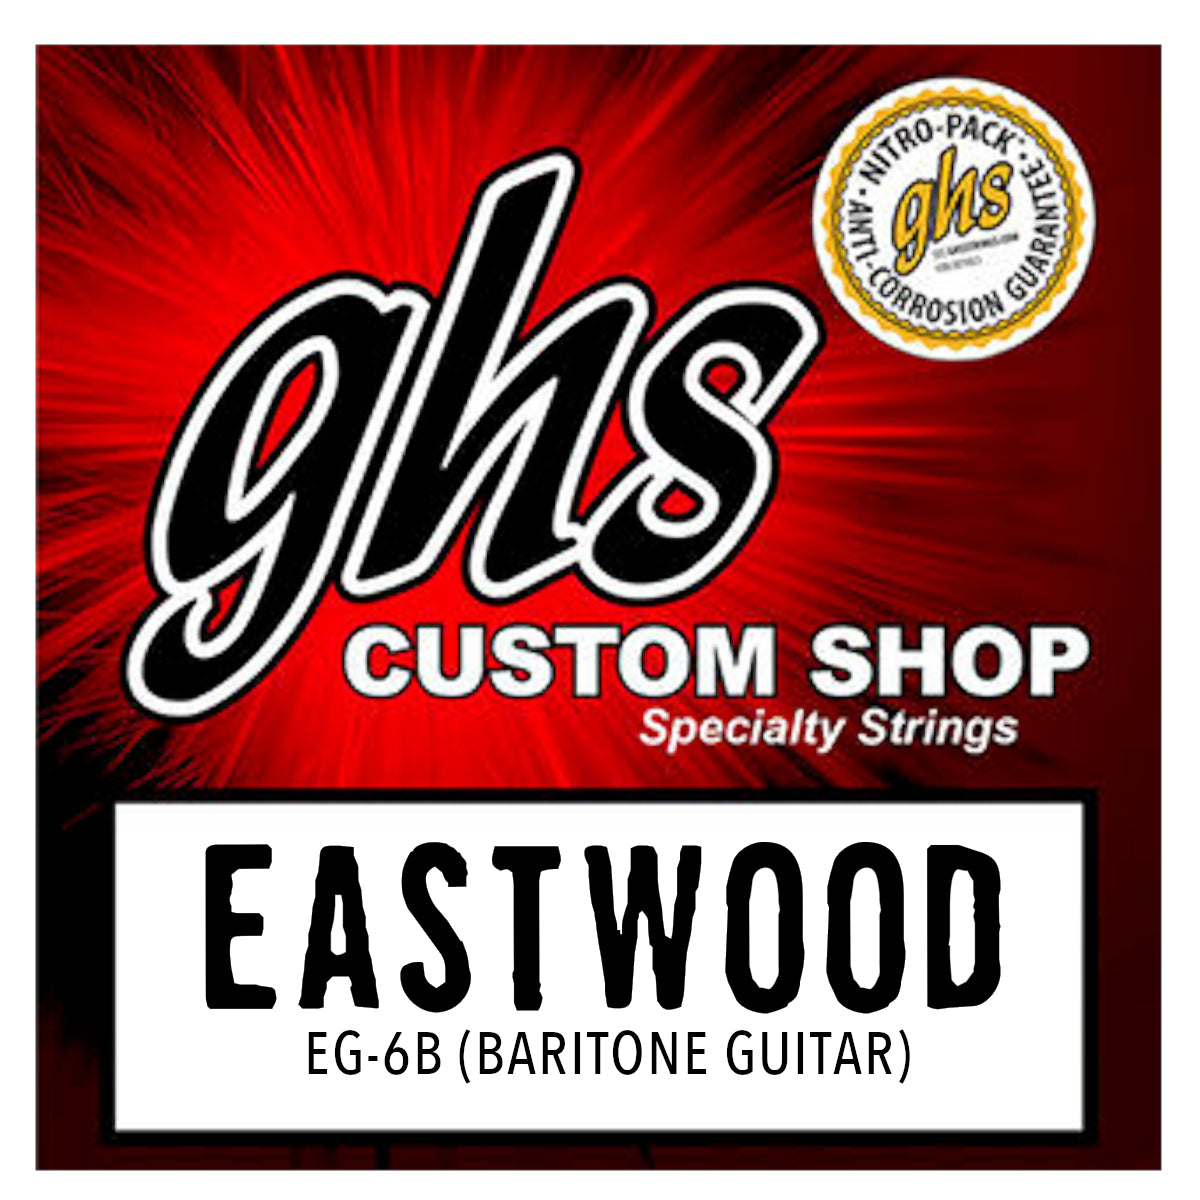 Eastwood/GHS Custom Strings - Baritone Guitar EG-6B Baritone